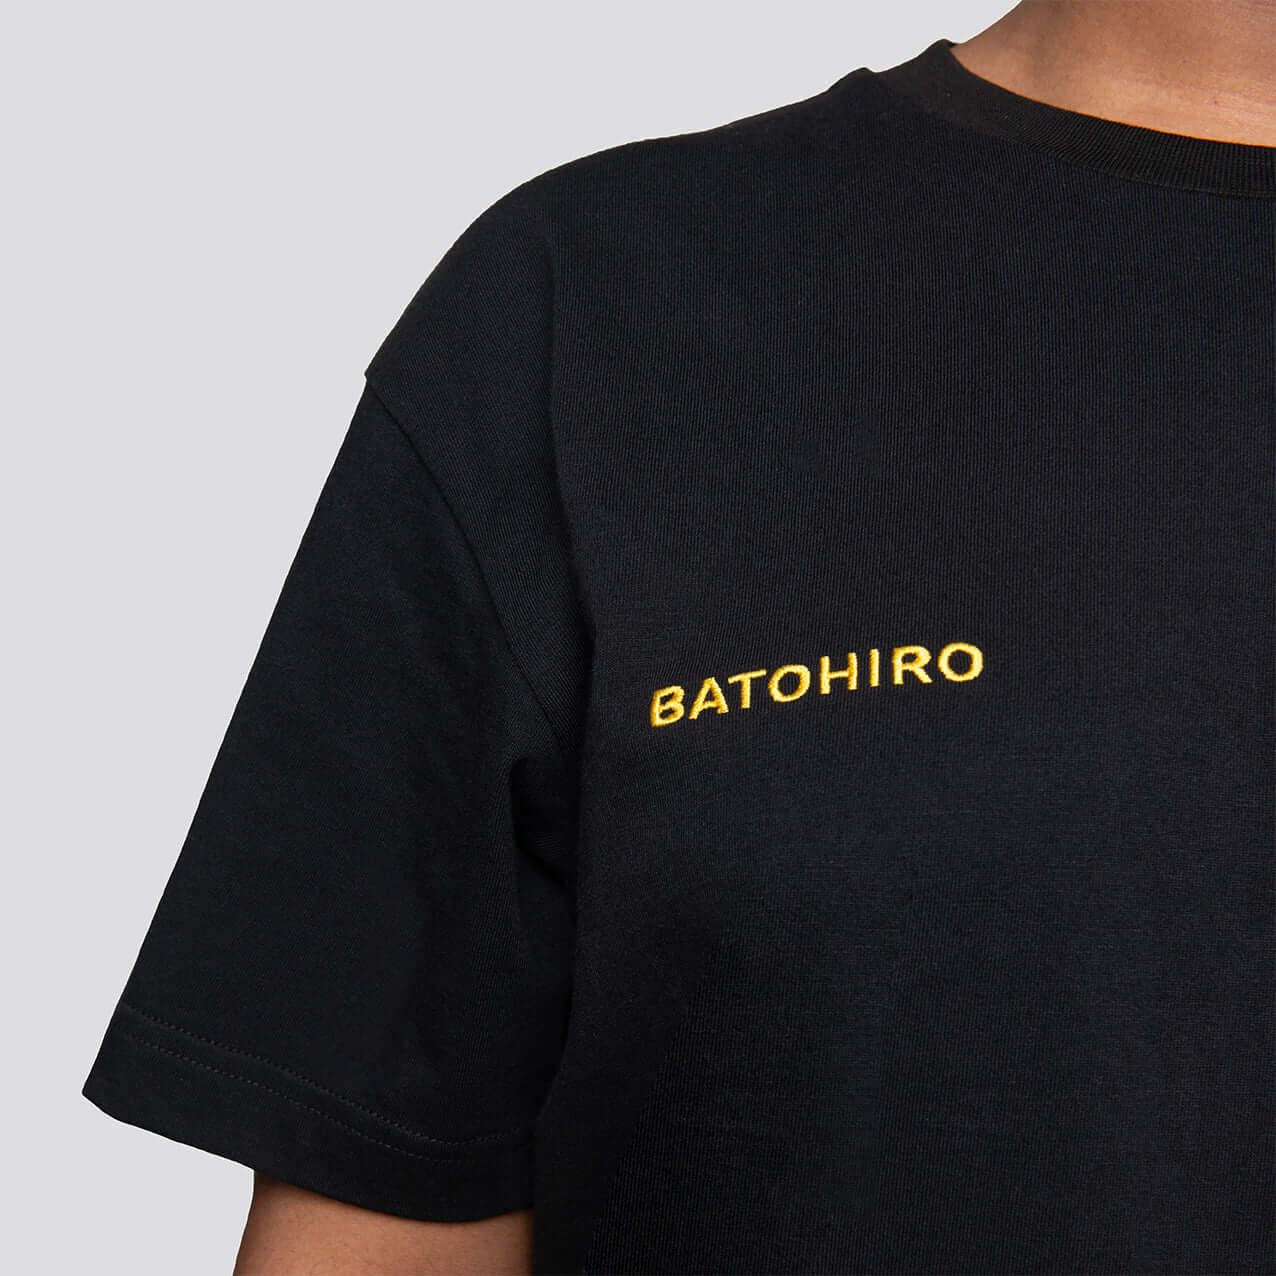 01 BASIC Černé triko - Batohiro